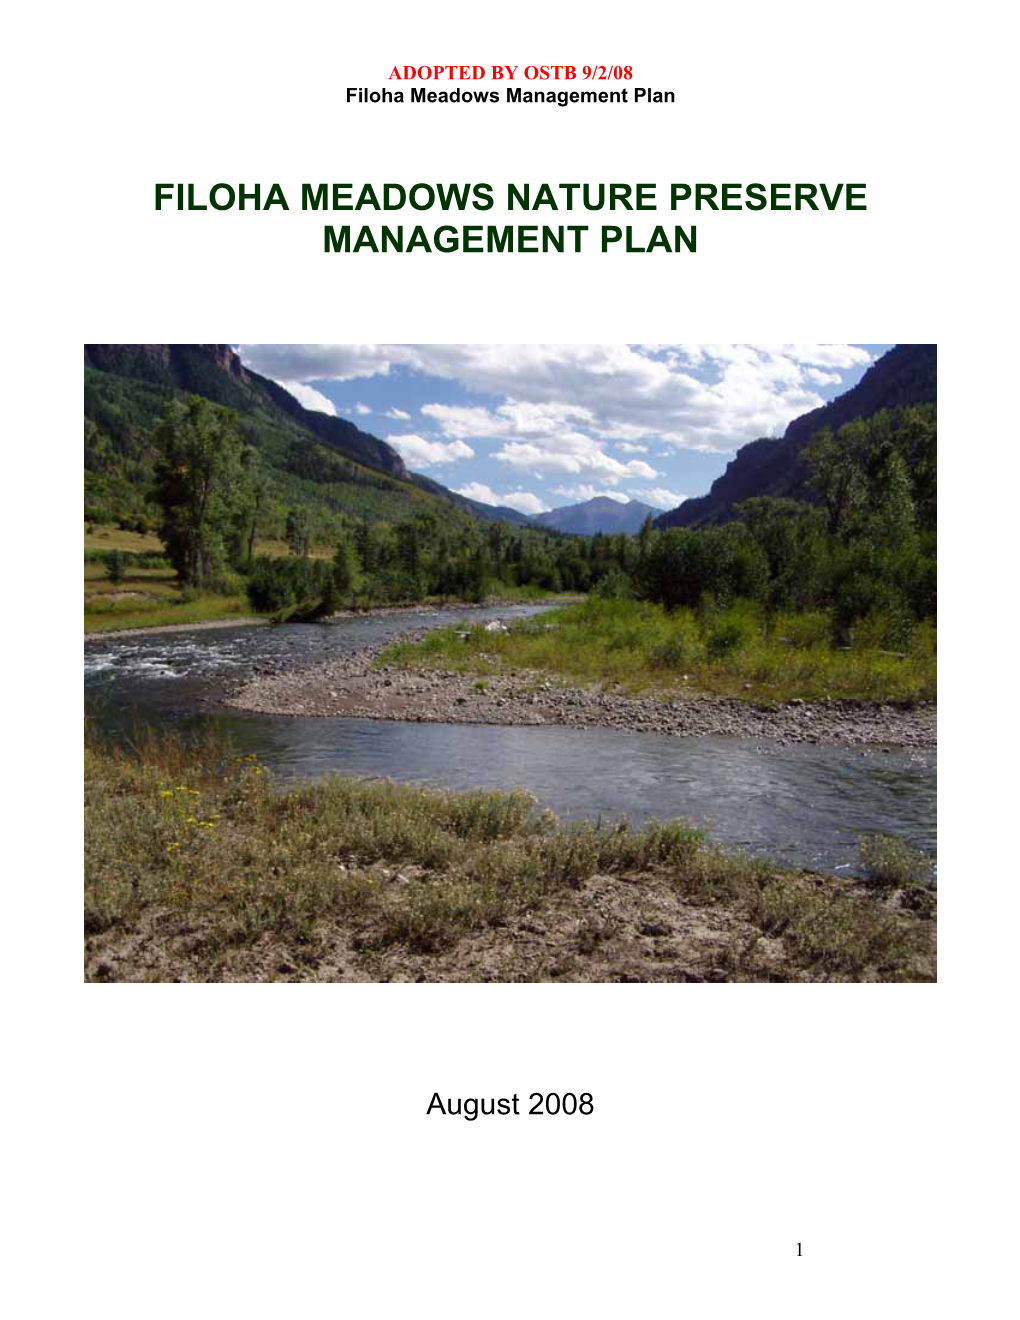 Filoha Meadows Nature Preserve Management Plan